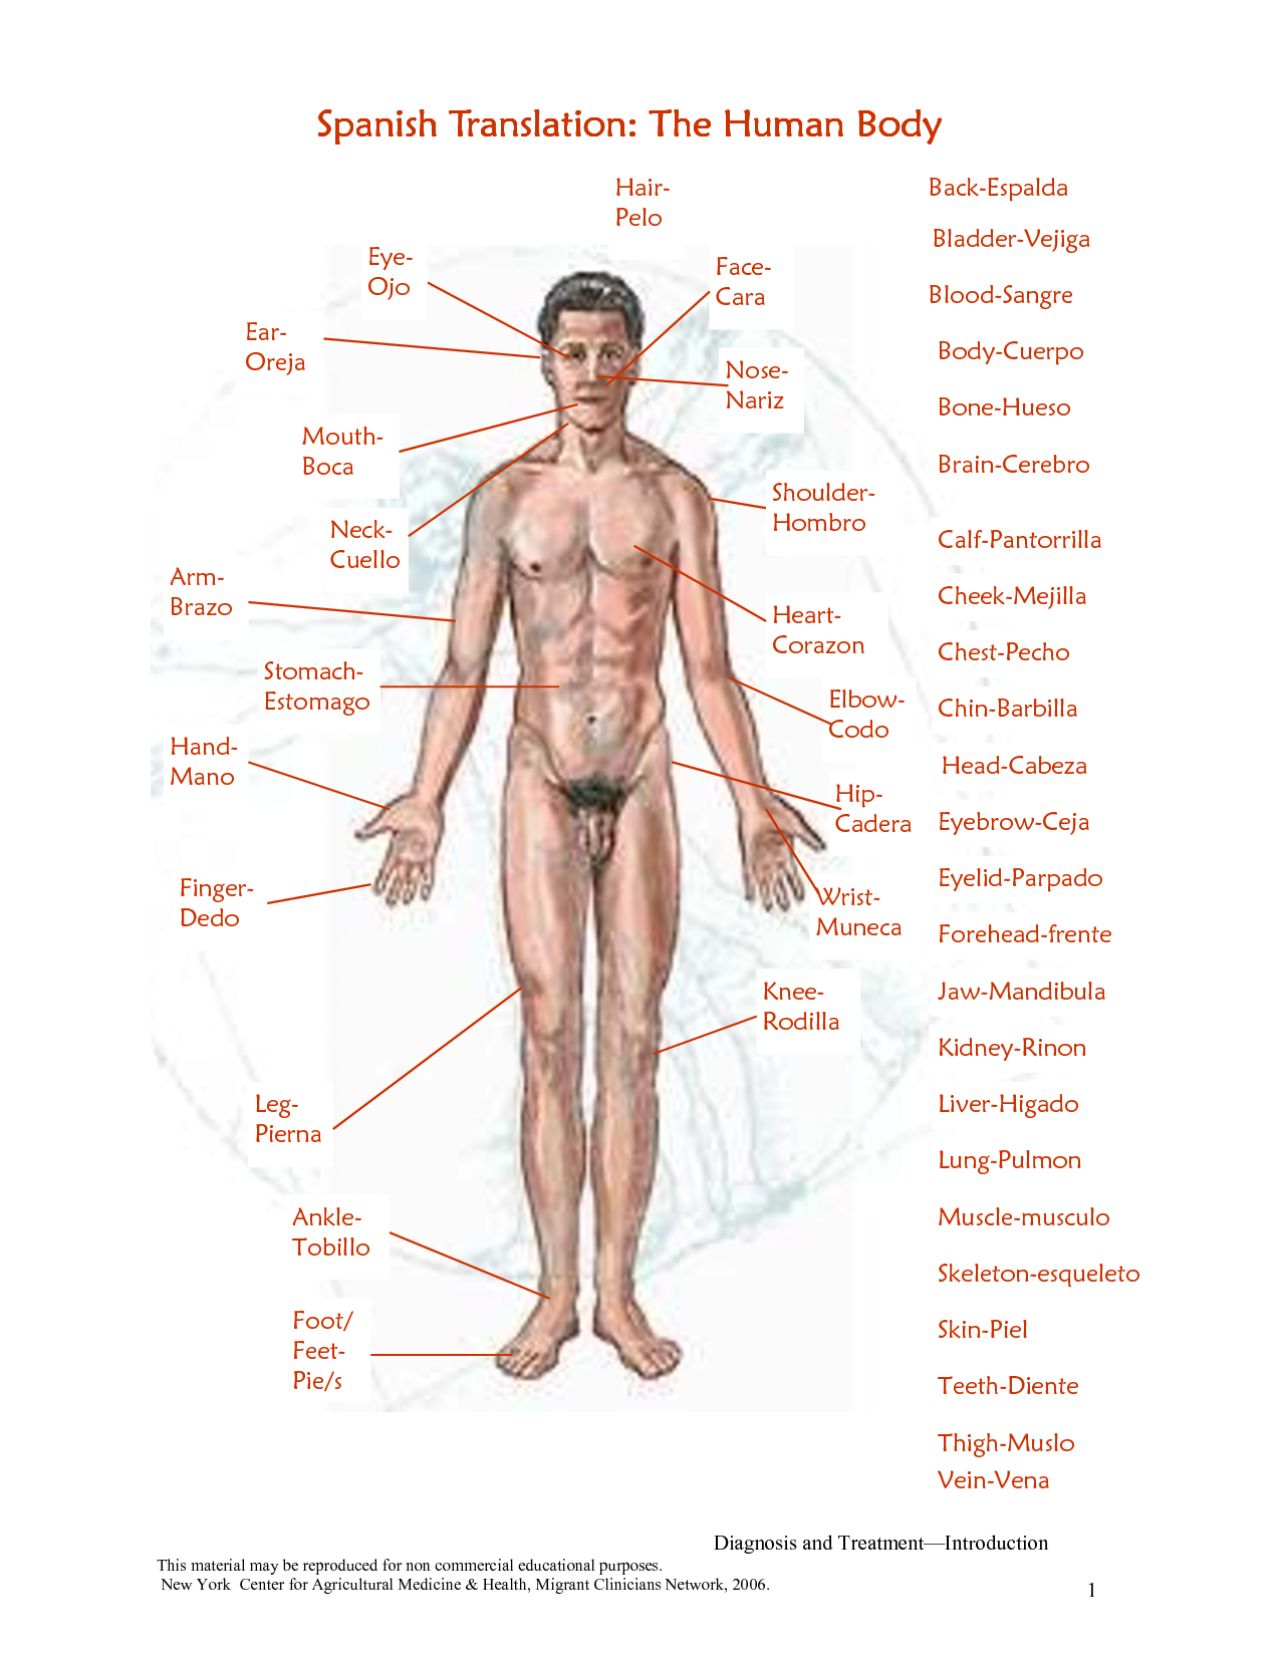 Spanish Human Body Parts | Human Anatomy Body Ideas